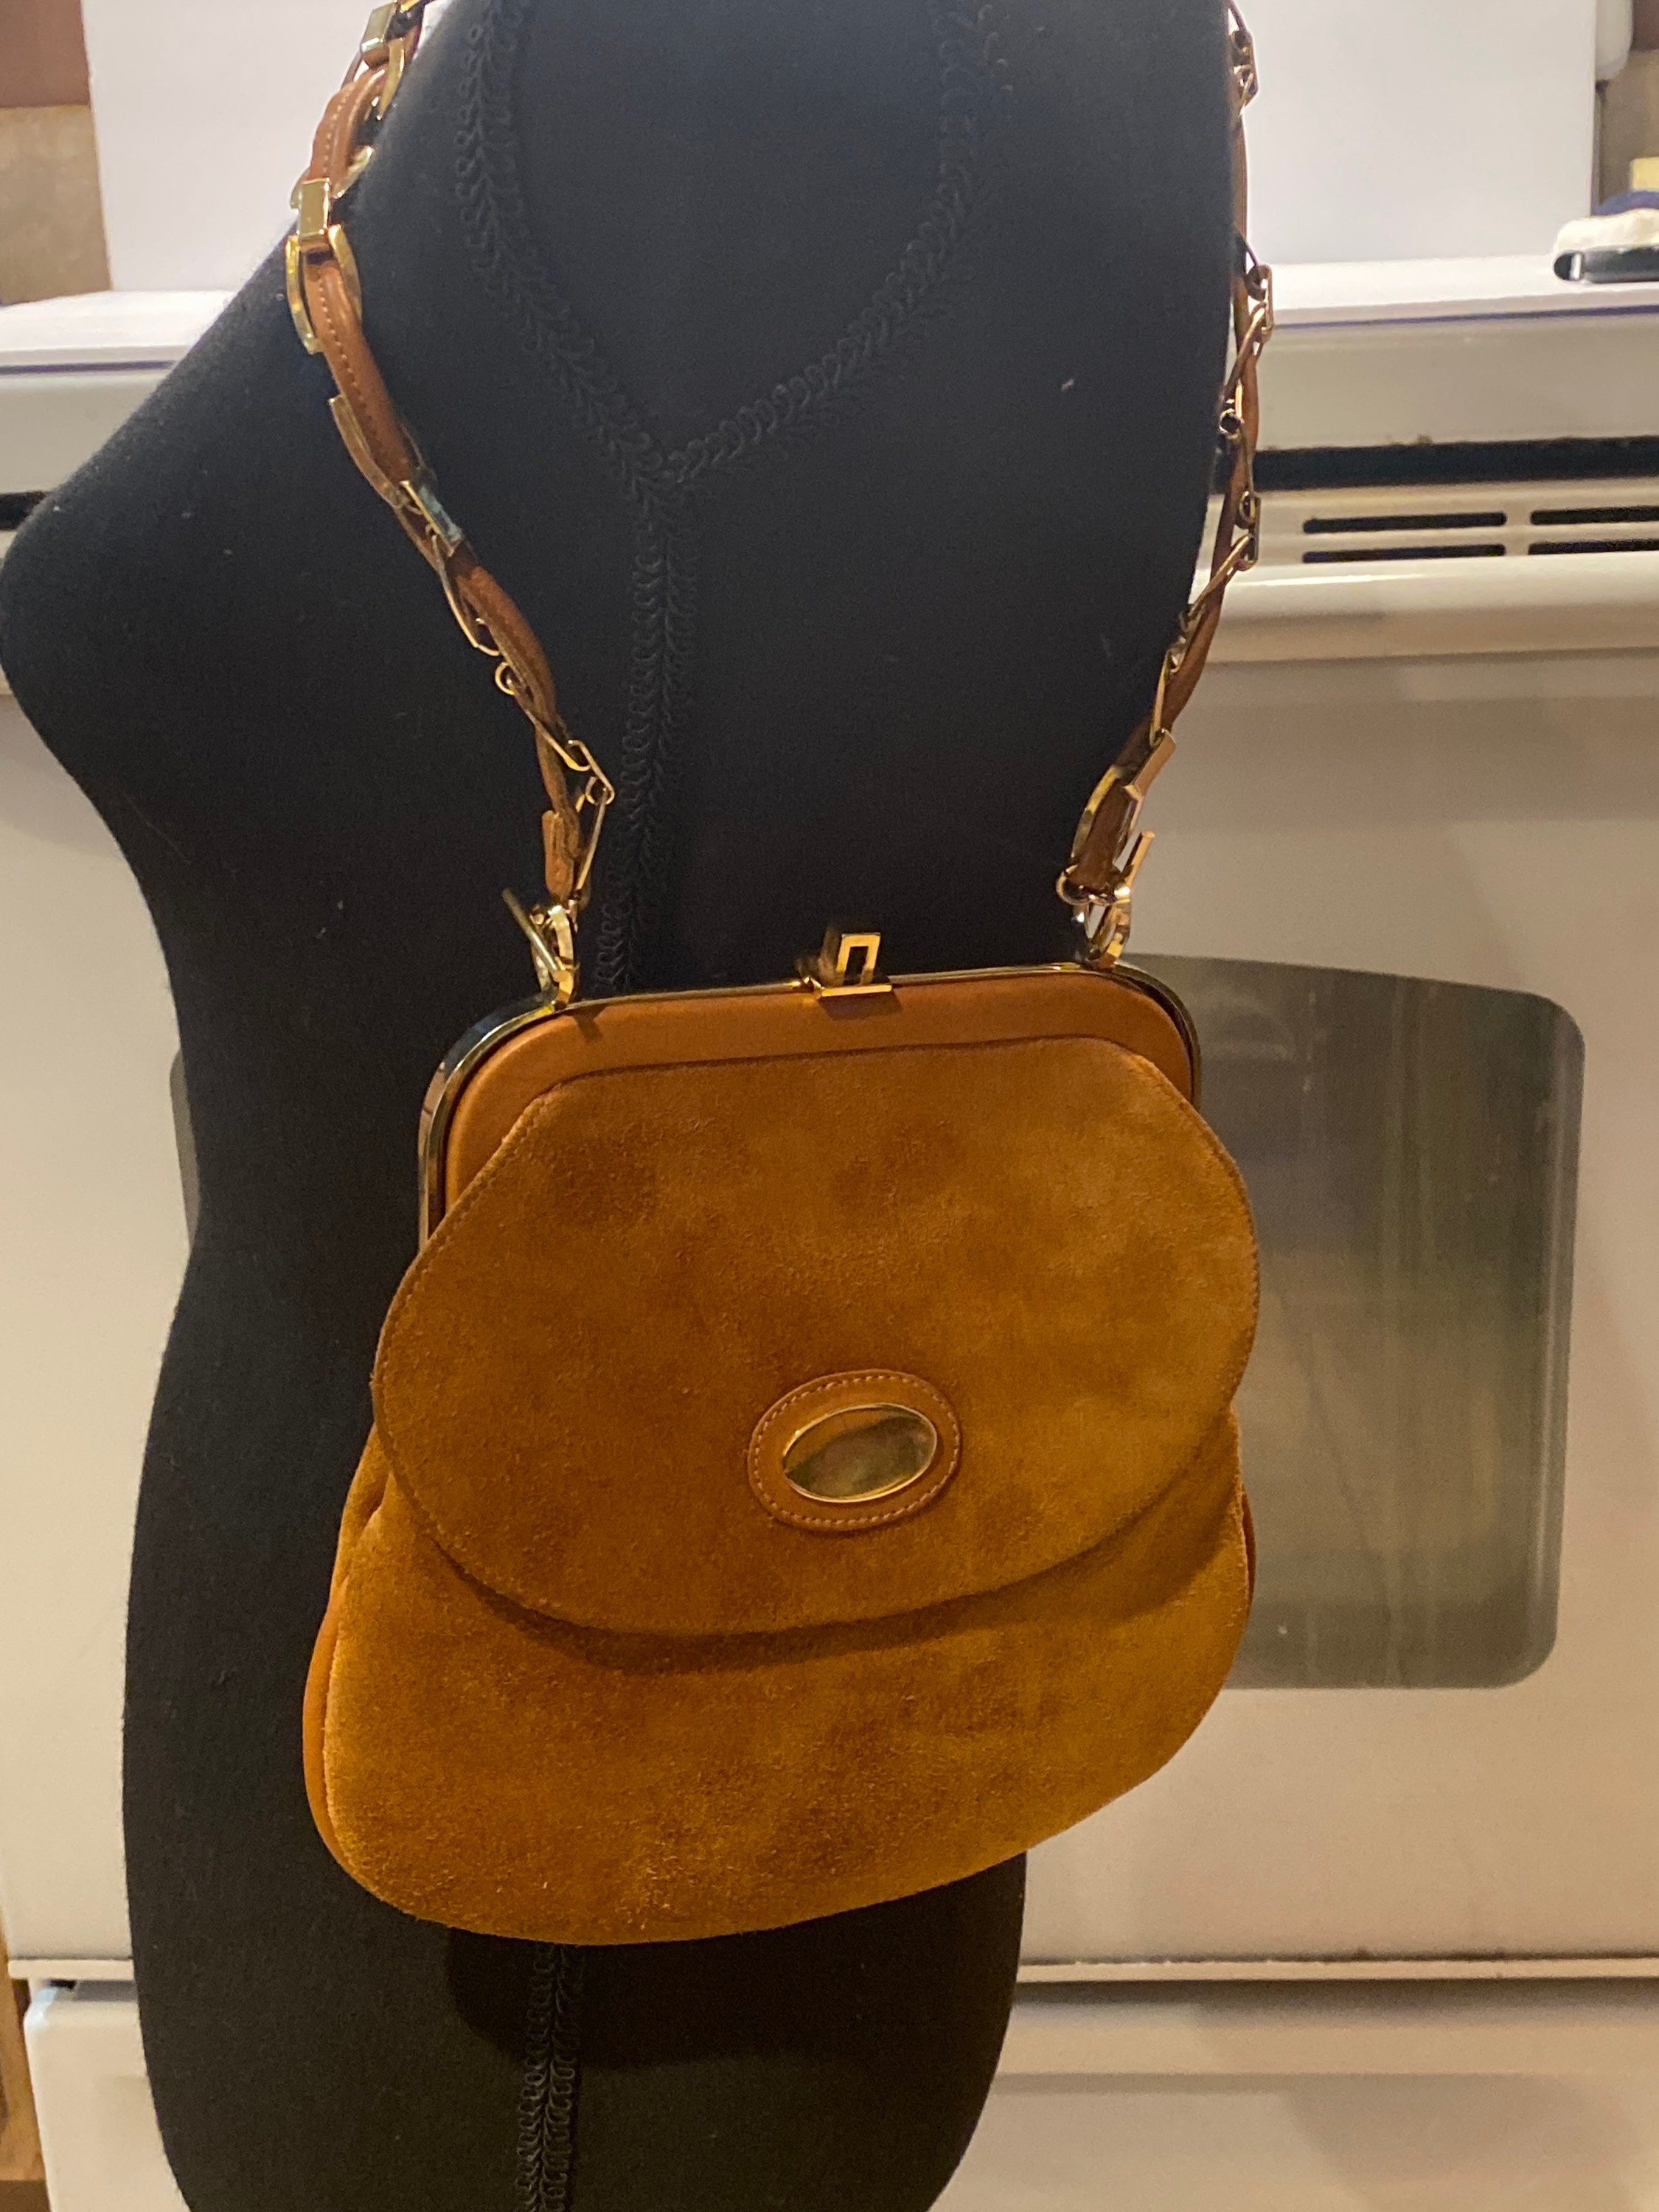 SUSAN 01 - Brown Leather Tote Bag